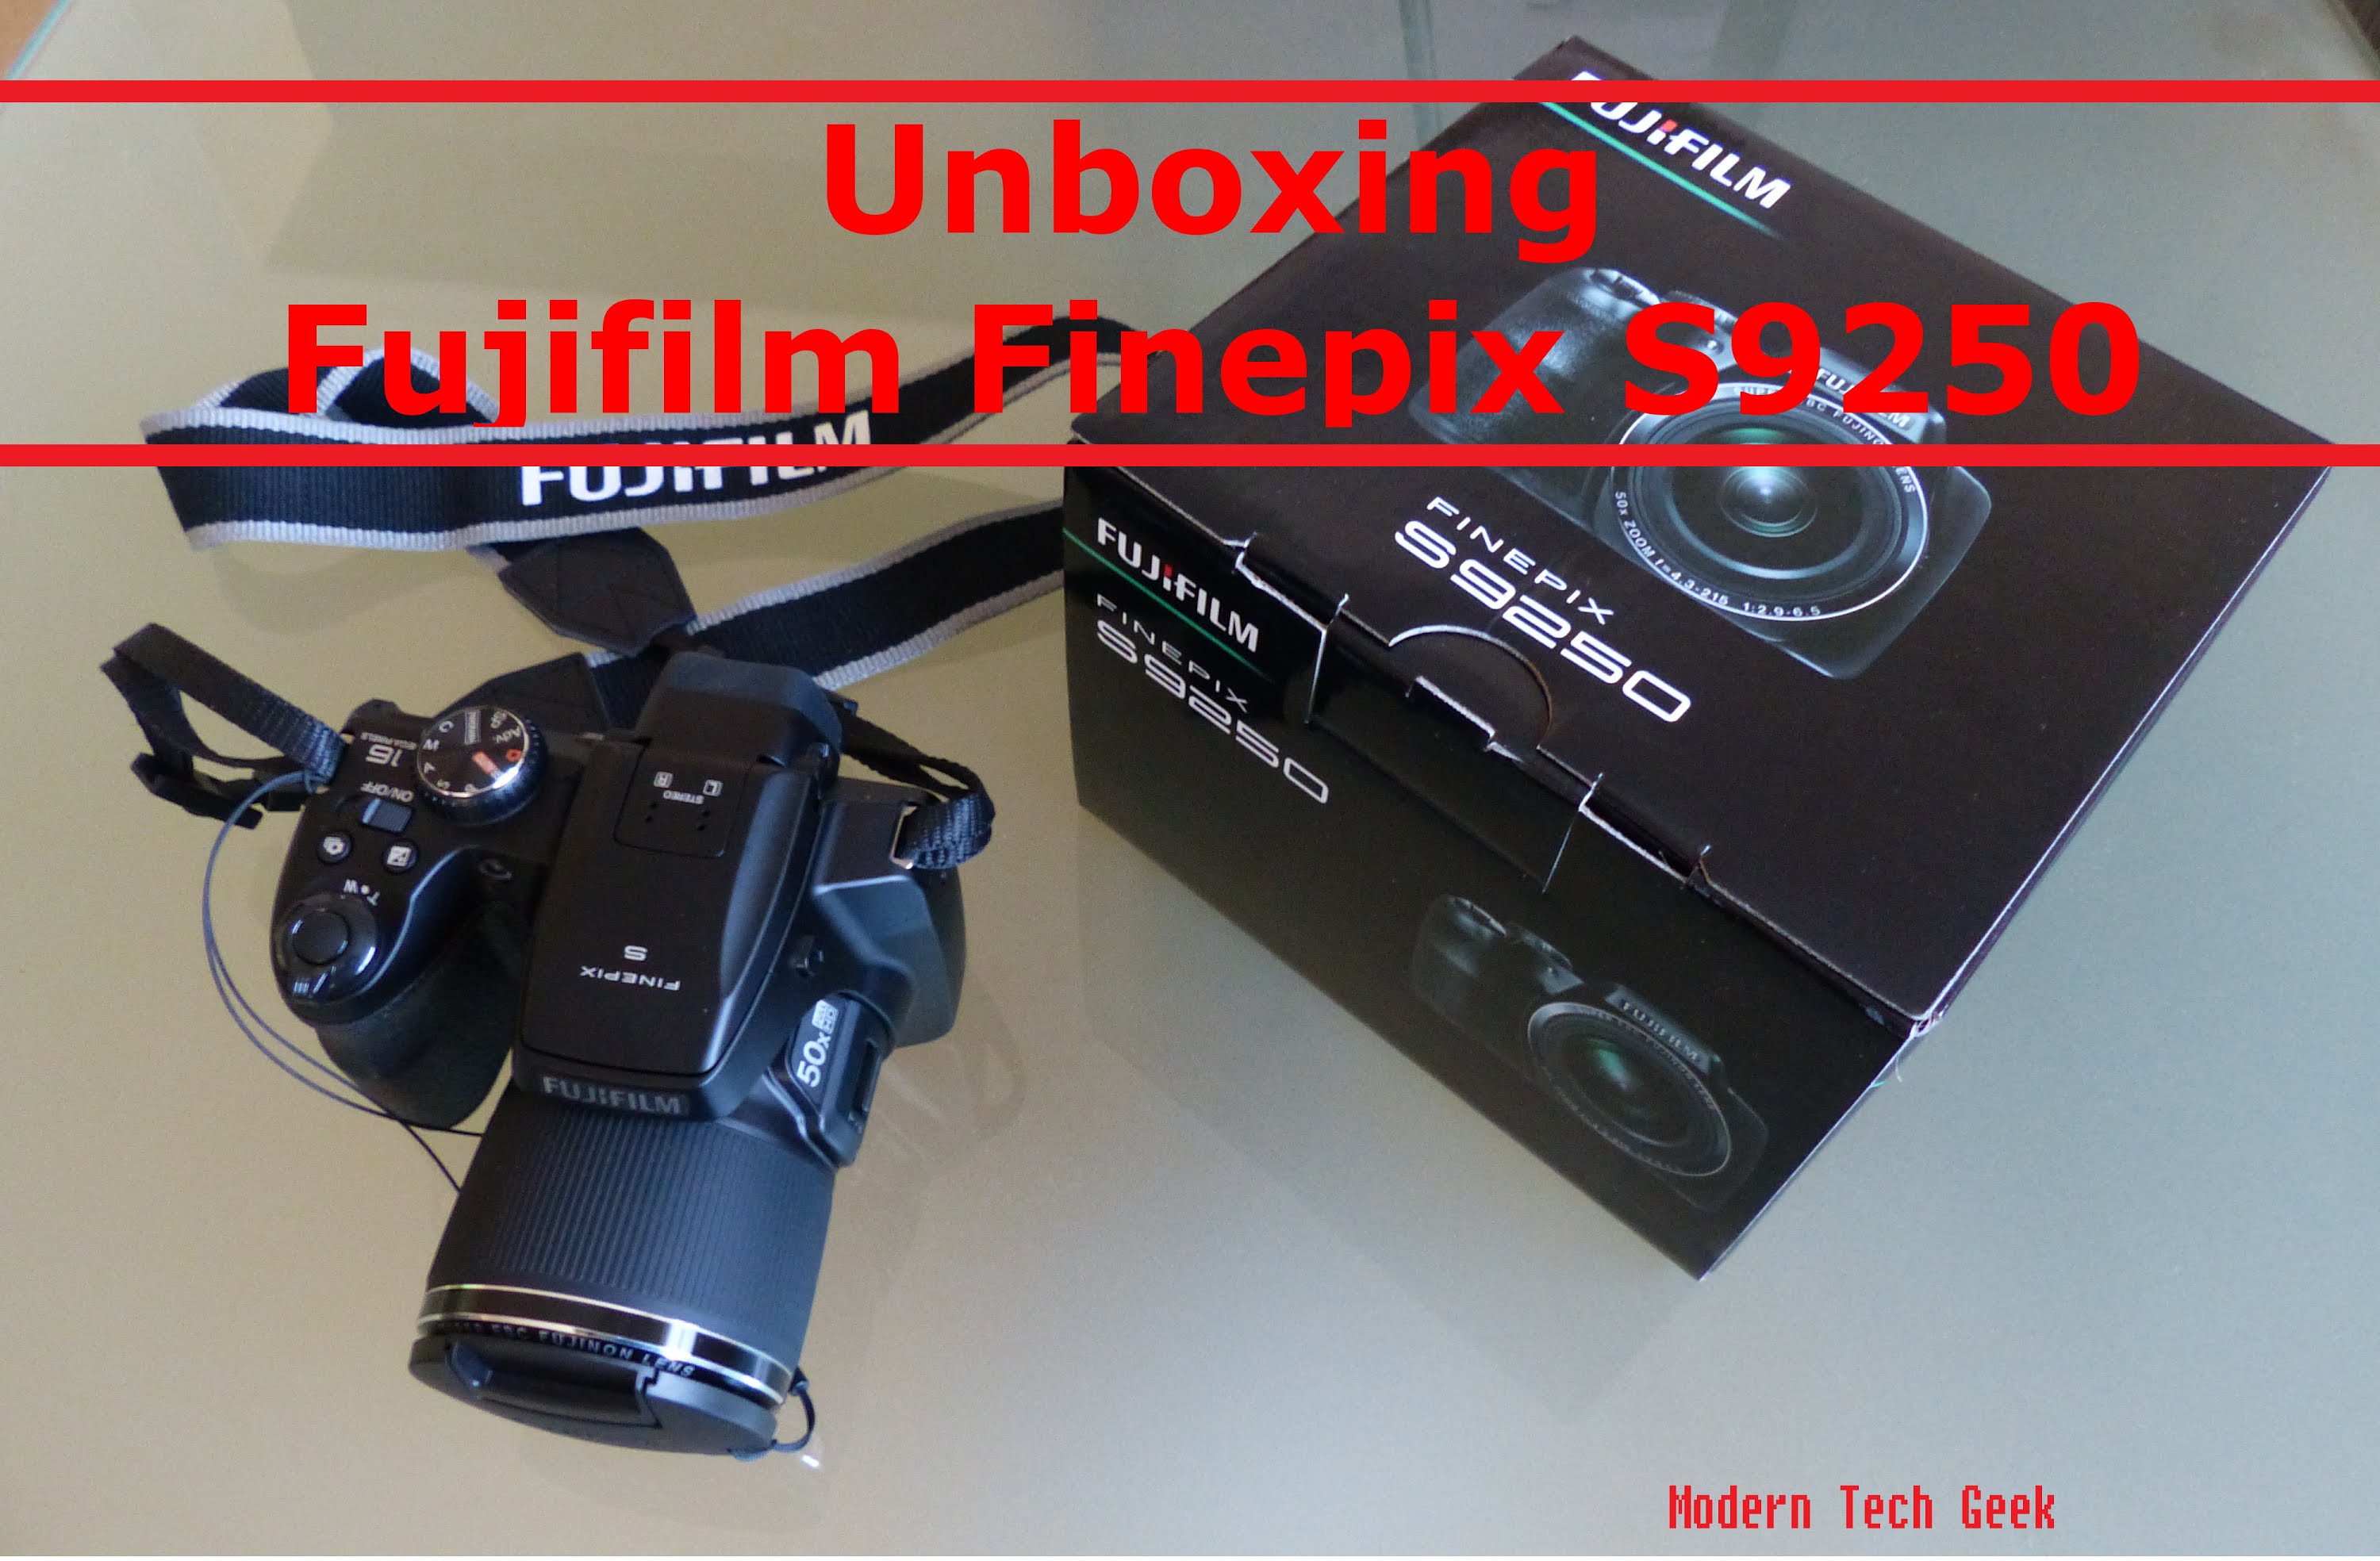 Fujifilm Finepix S9250 Digital Camera Unboxing